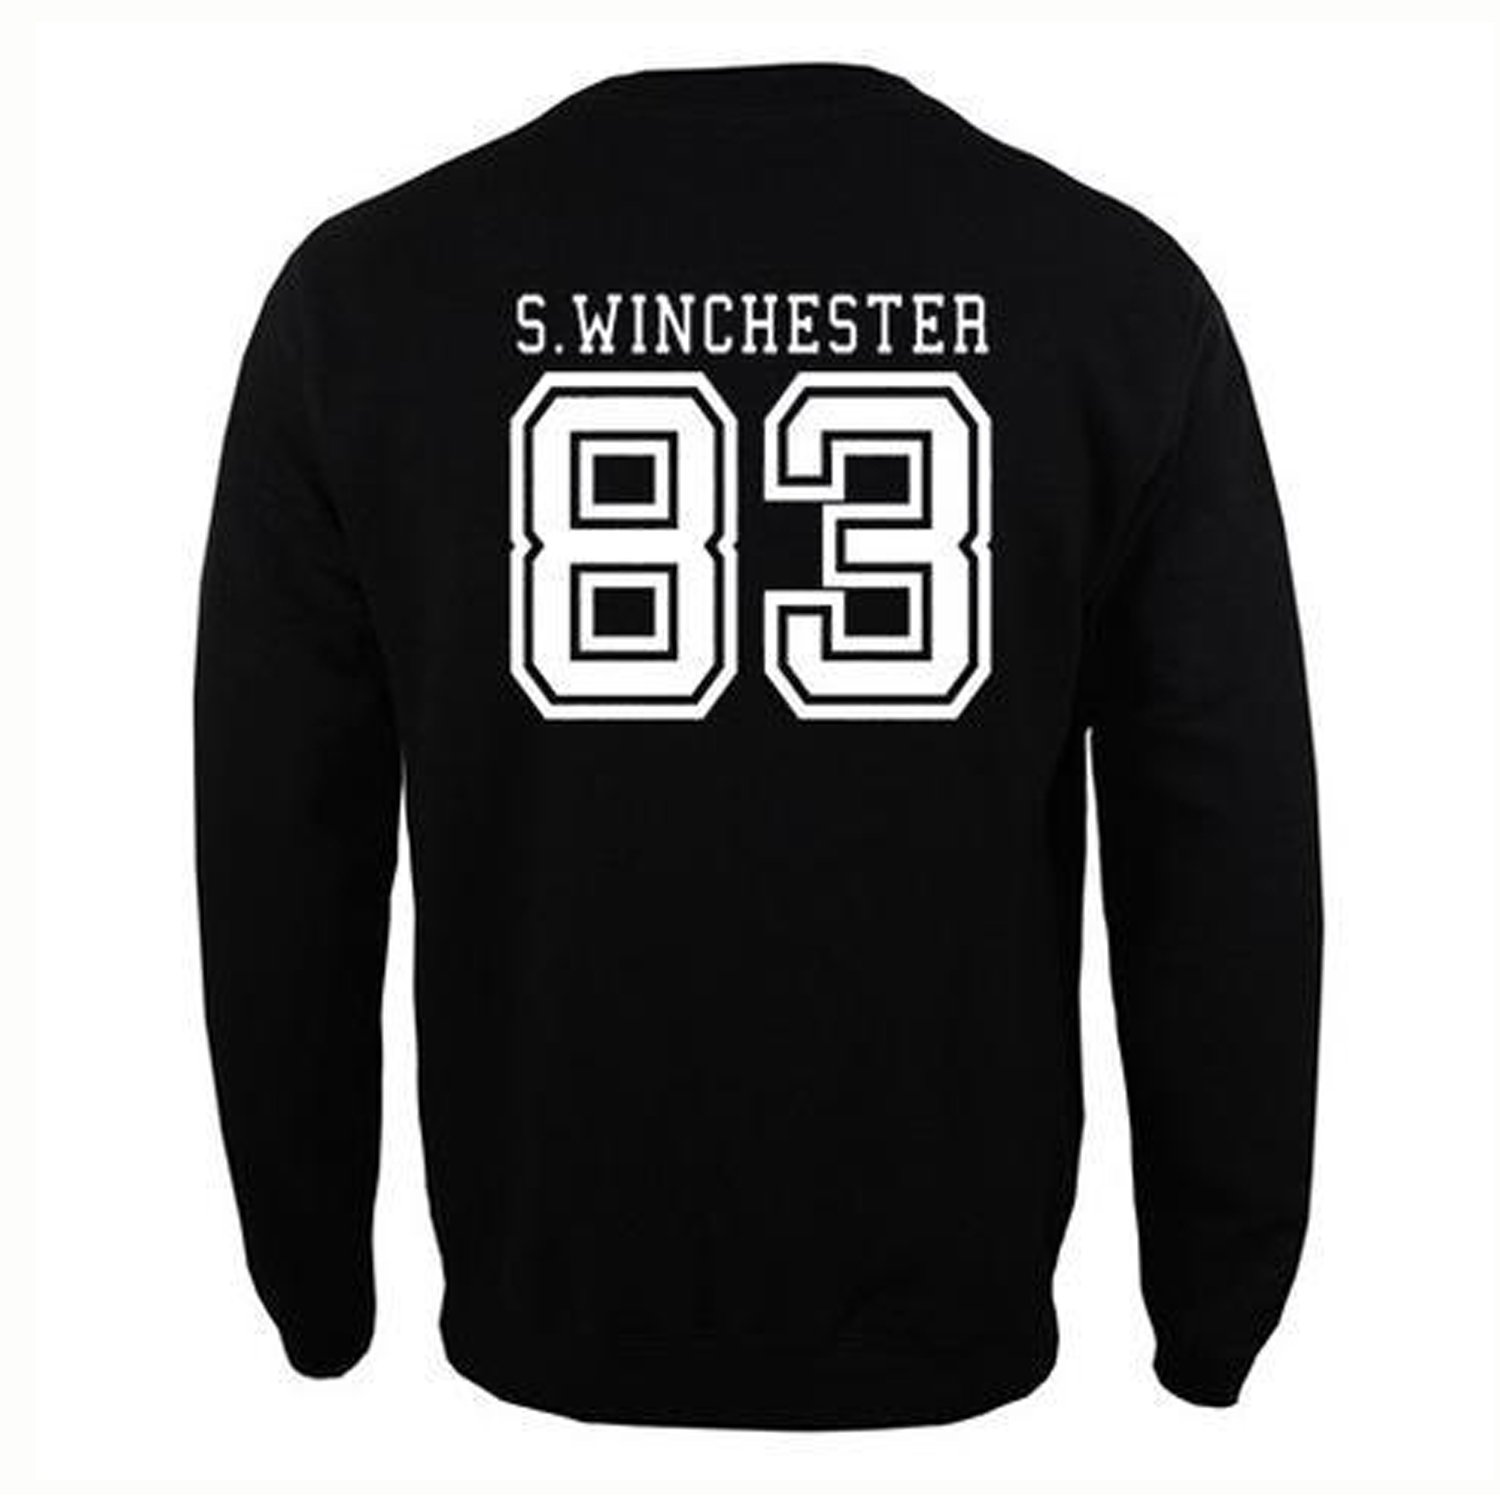 S Winchester 83 Sweatshirt KM - Kendrablanca